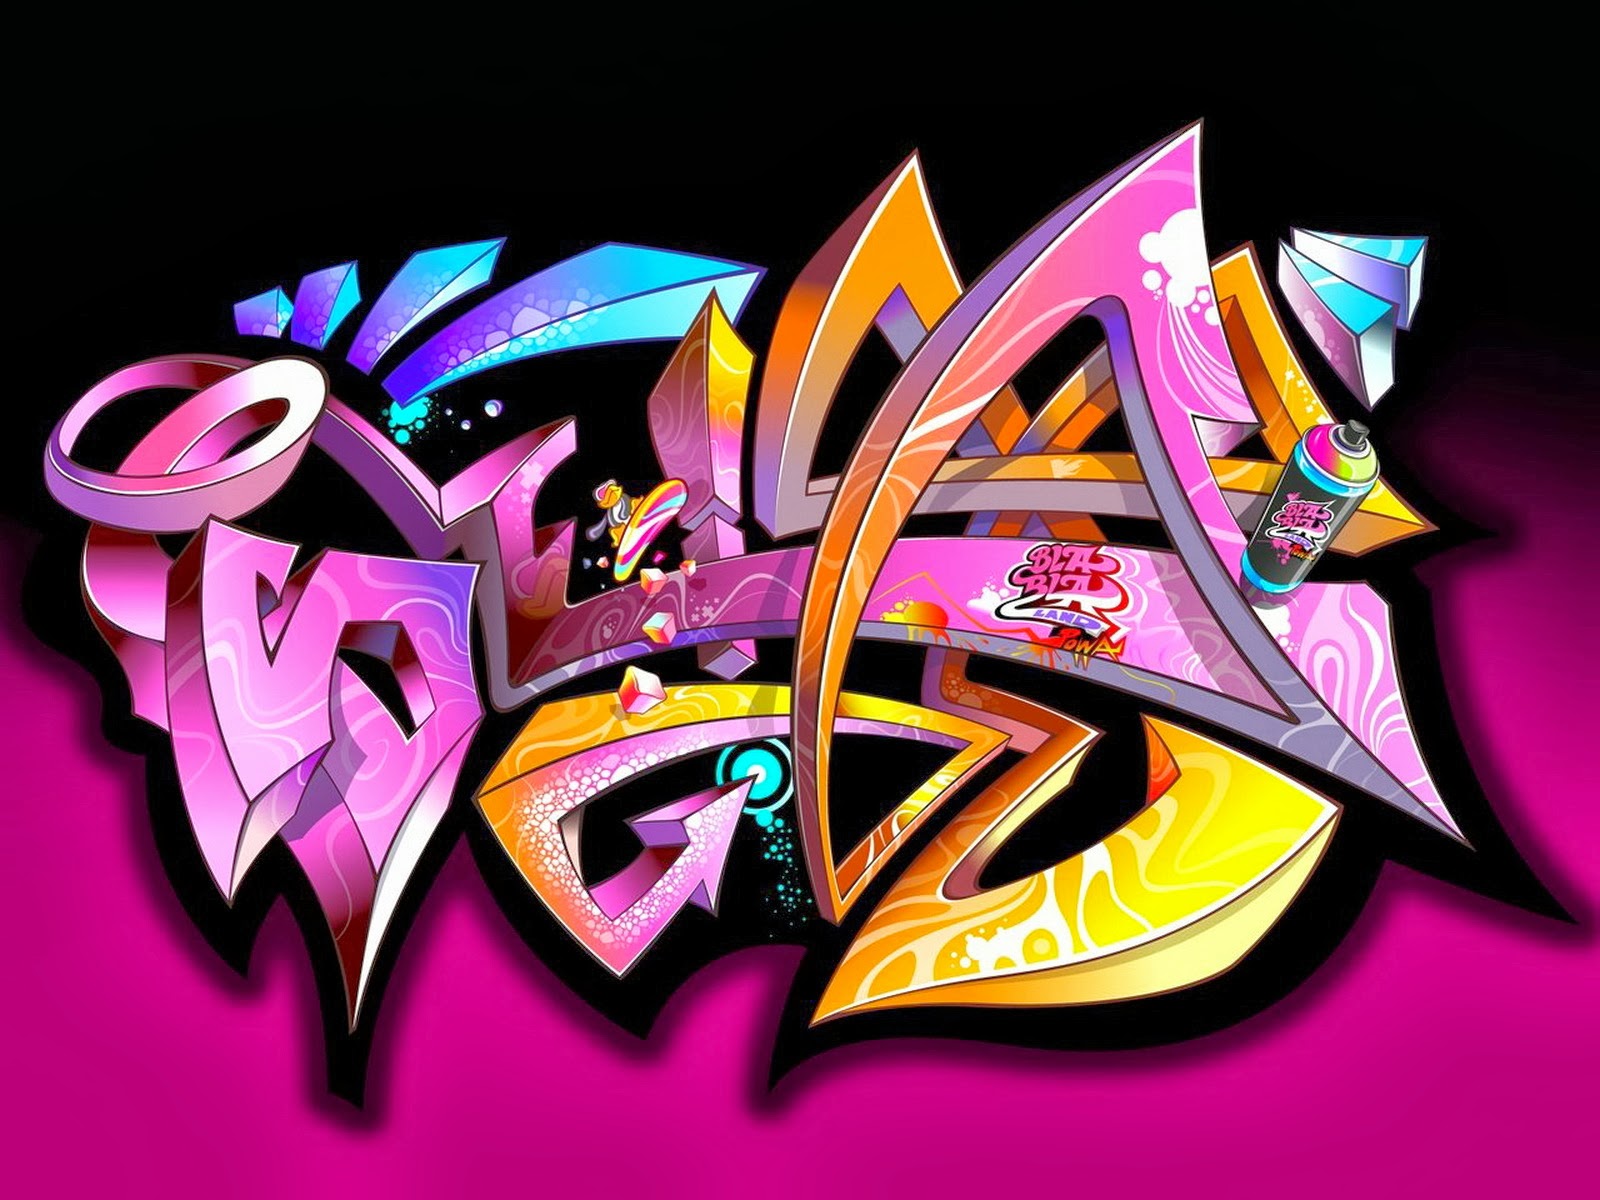 graffiti wallpaper uk,graphic design,text,font,graffiti,art